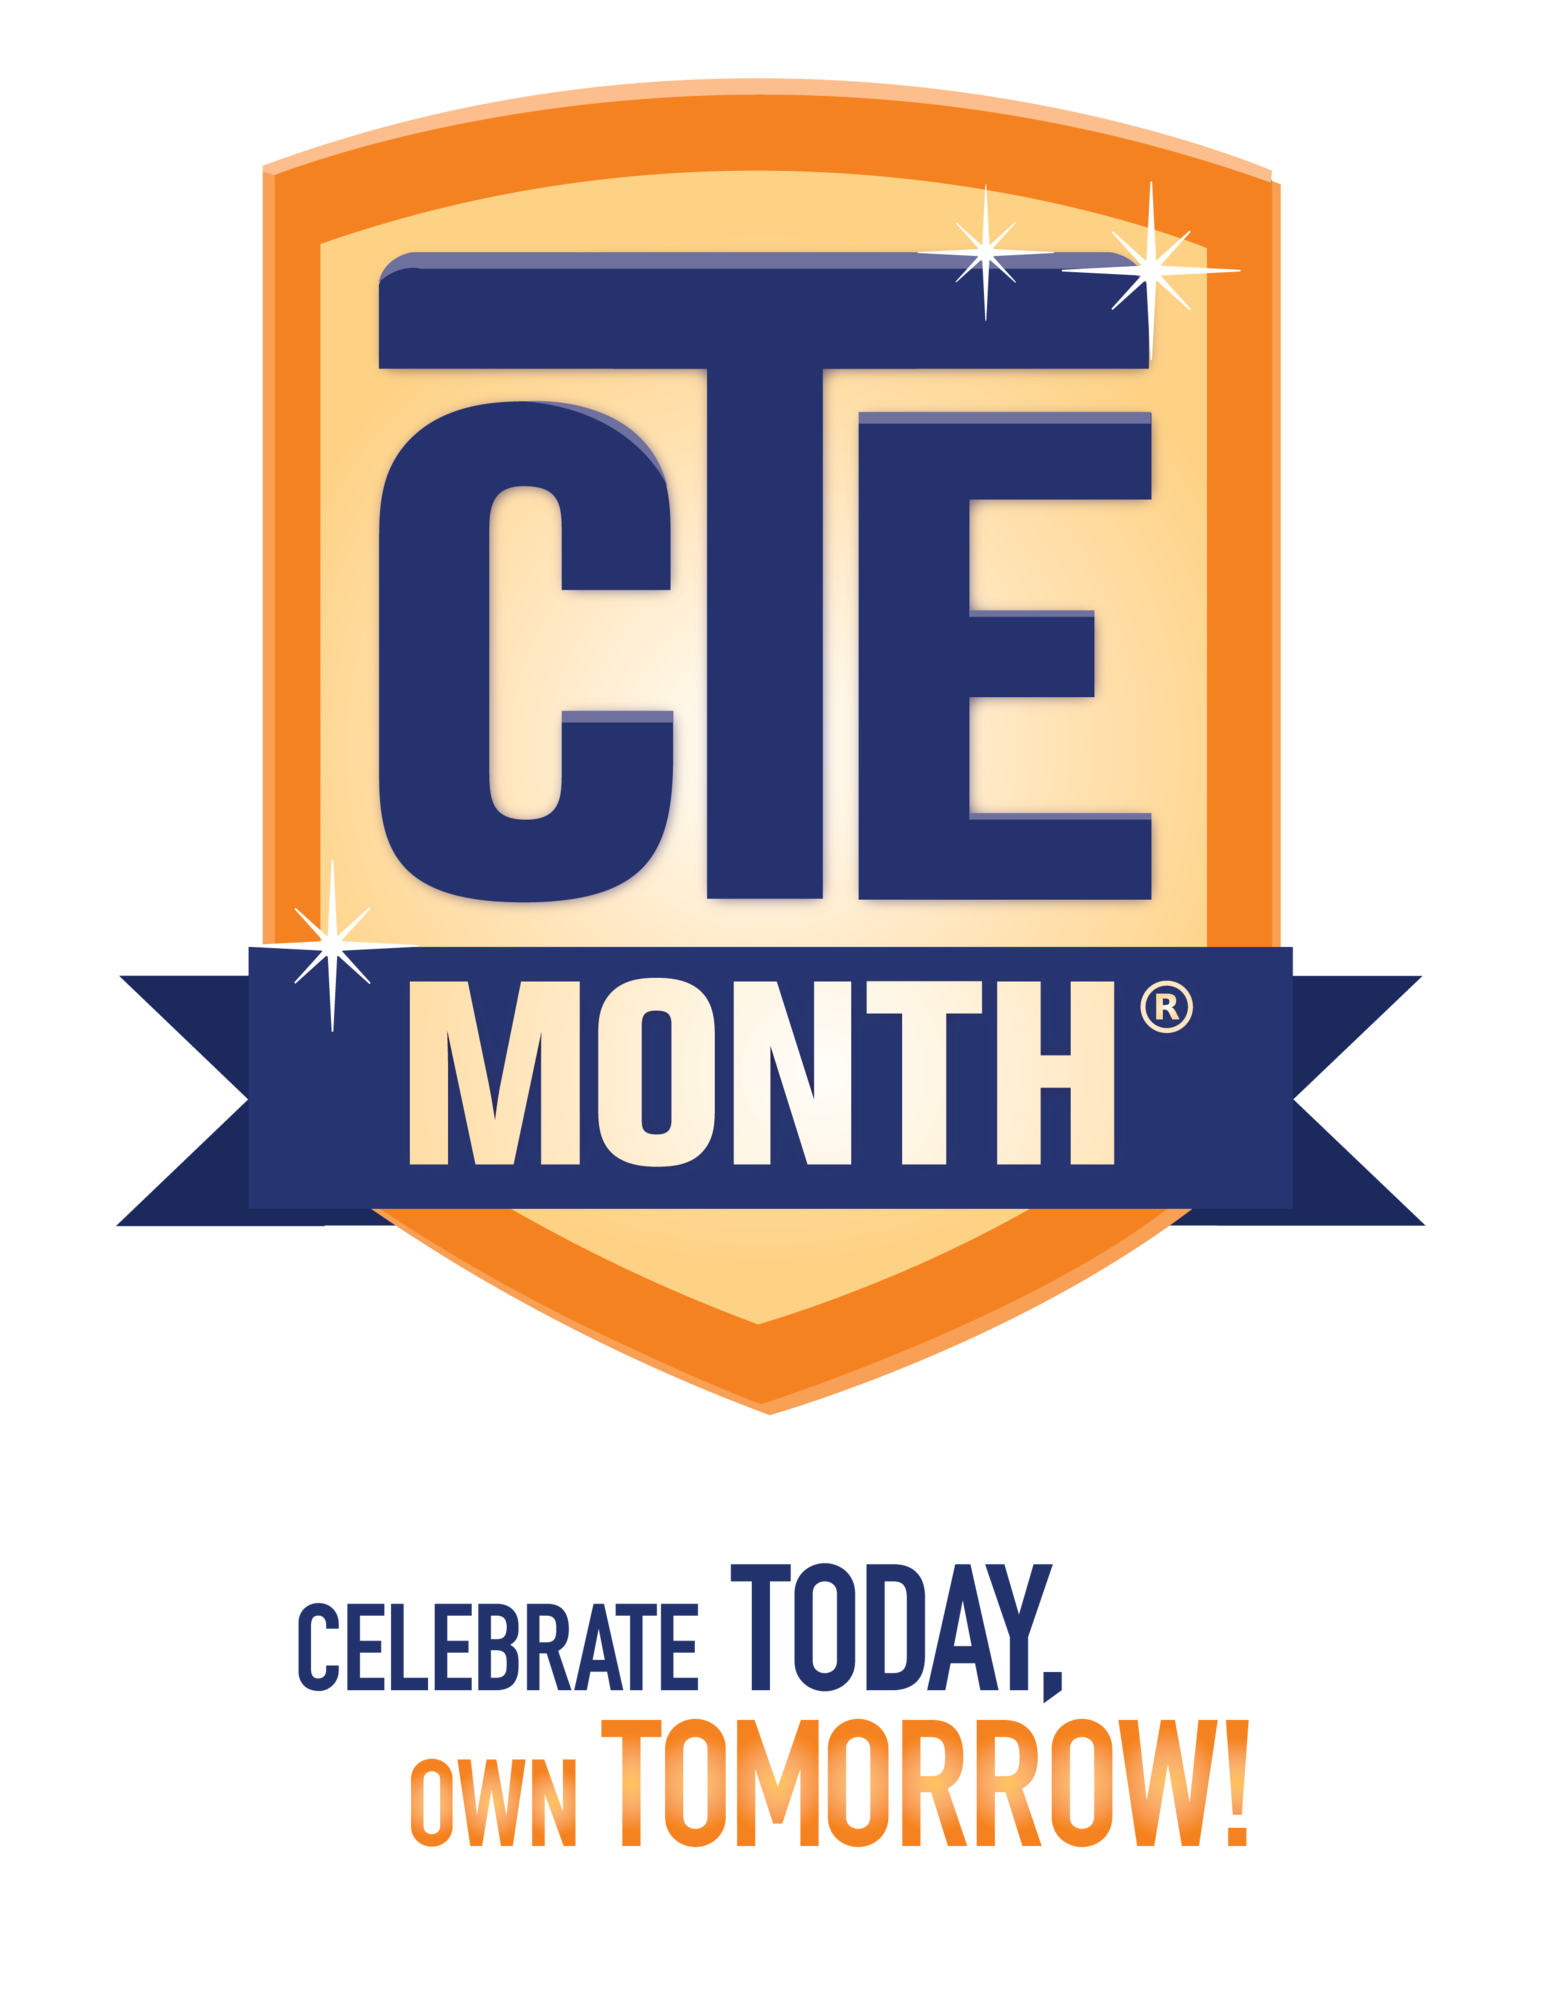 CTE Month information